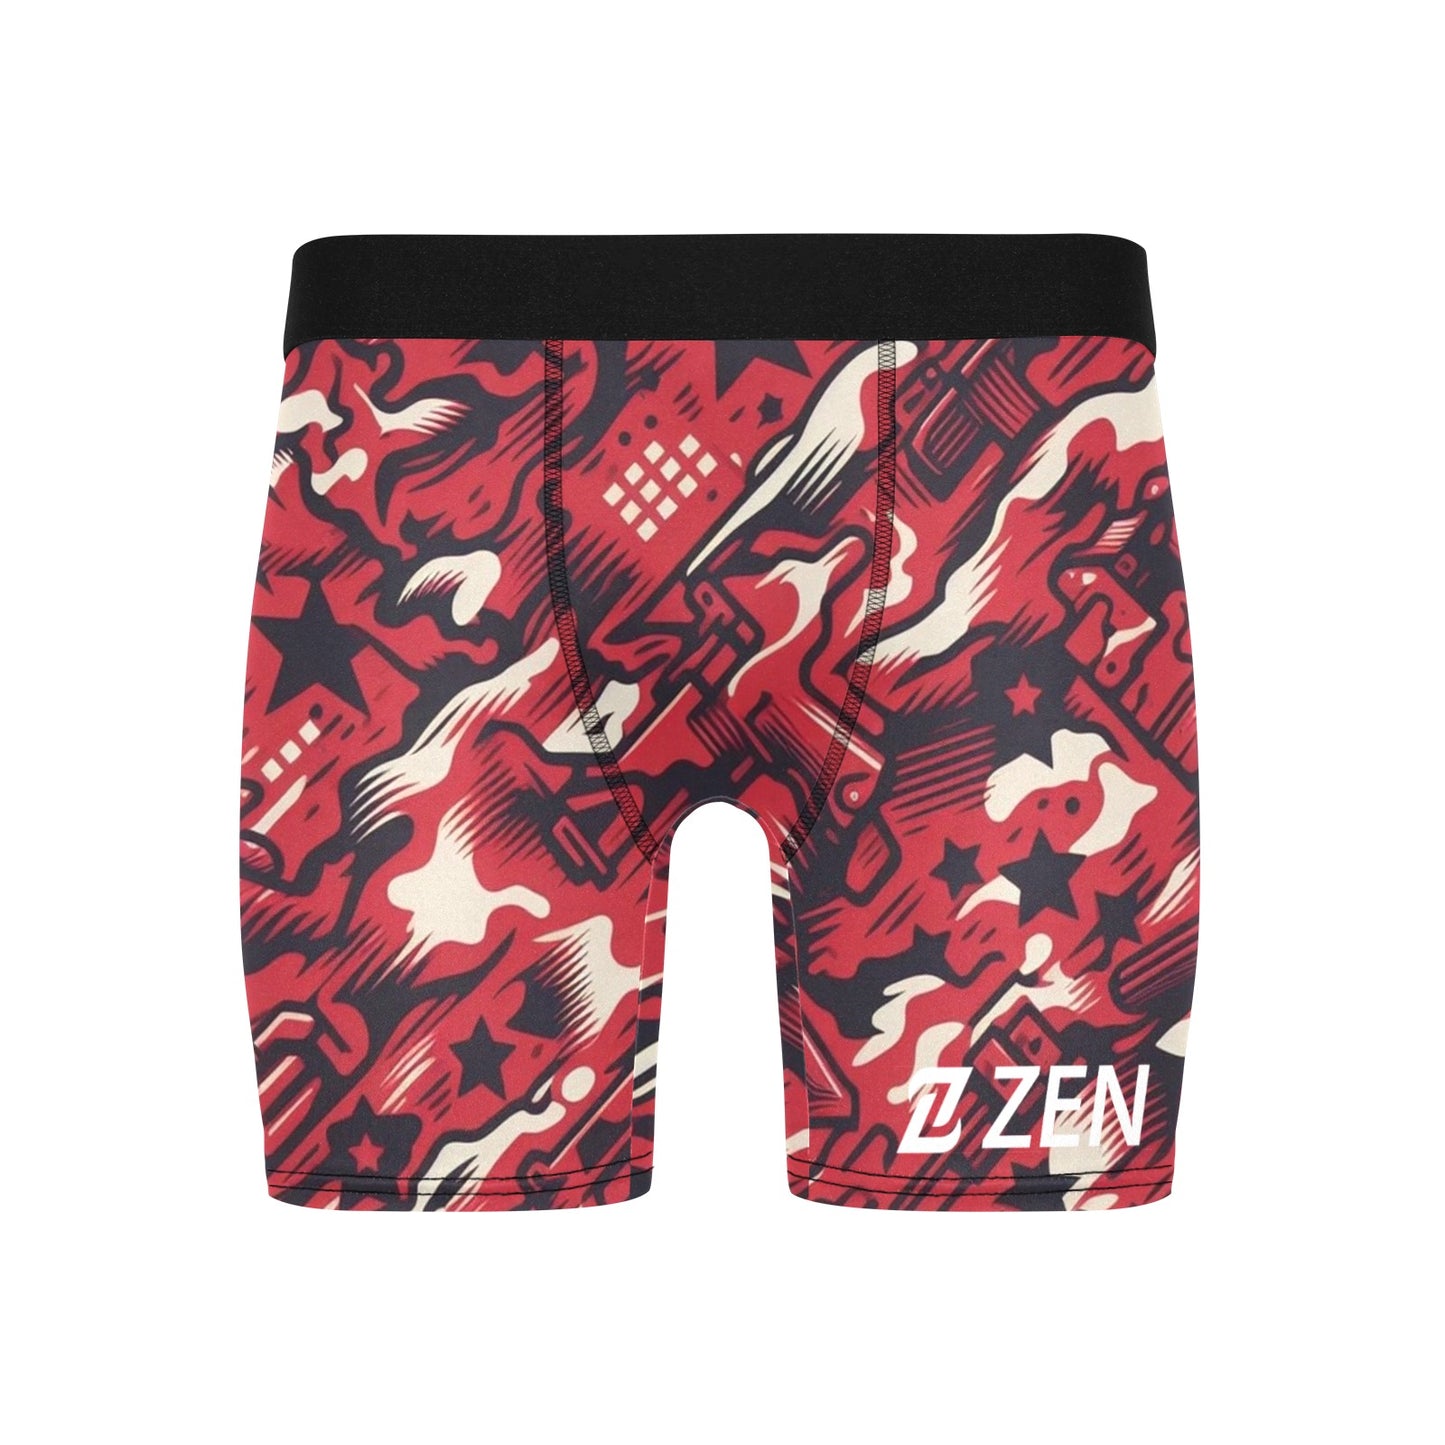 Zen Boxers Long - Red Camo